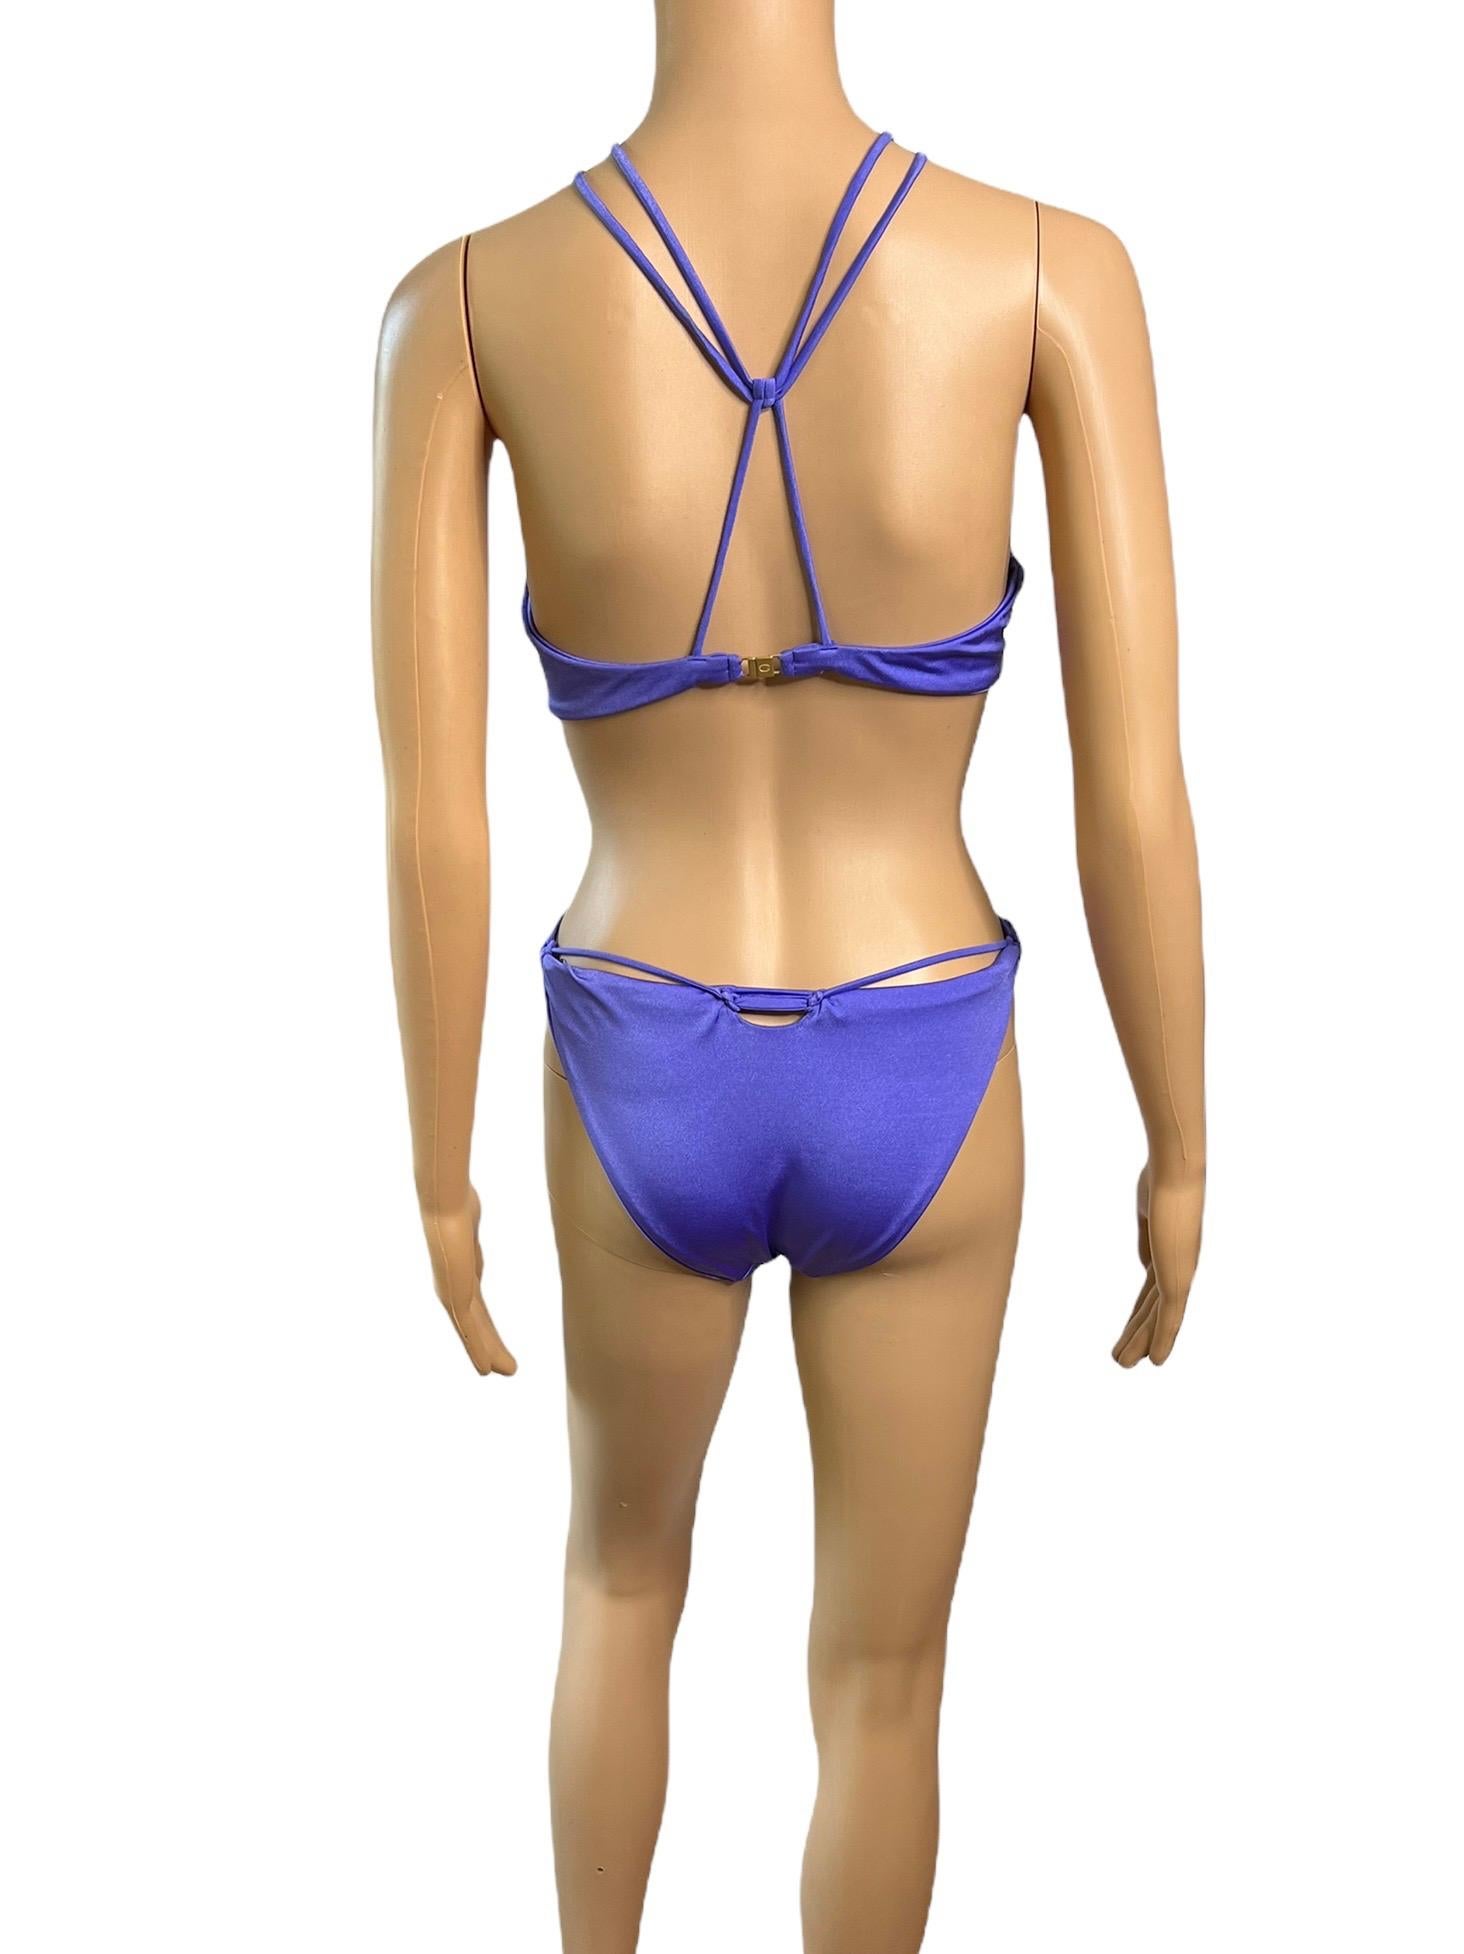 Tom Ford for Gucci c.2004 Bondage Strappy Two Piece Bikini Swimsuit Swimwear Size L
